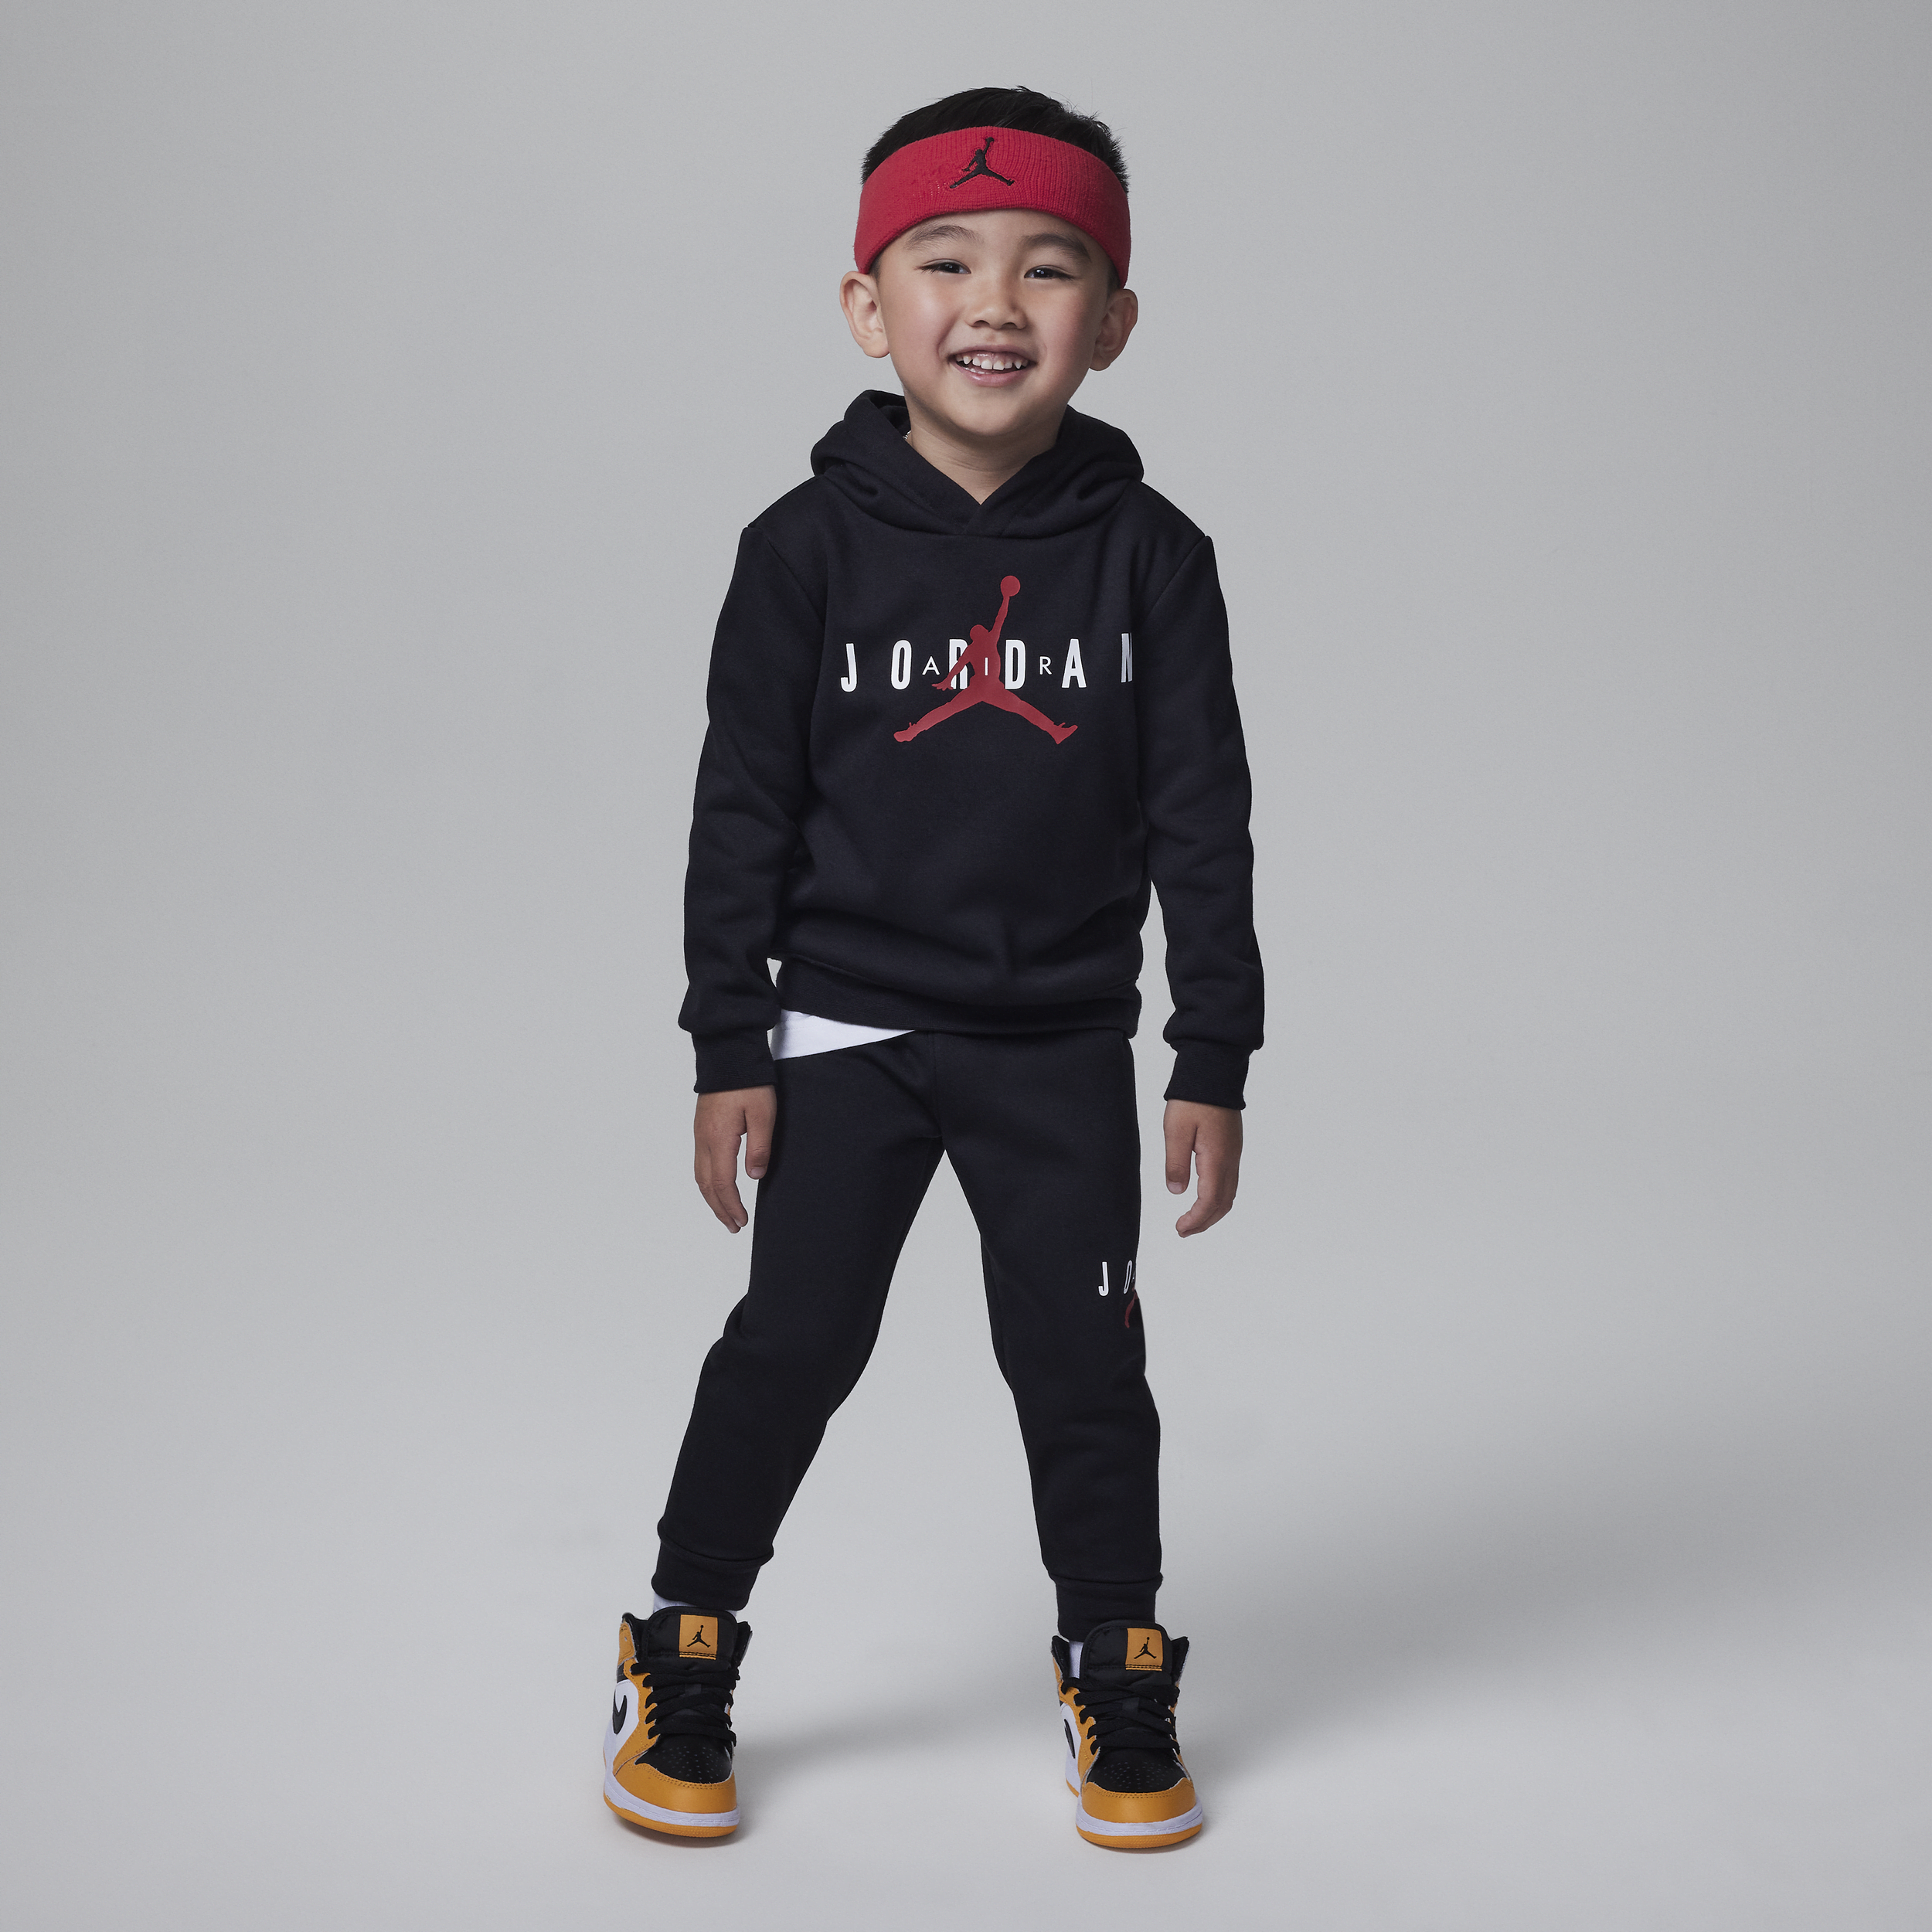 Jordan Sustainable Pullover Hoodie Set Conjunto de dos piezas - Infantil - Negro